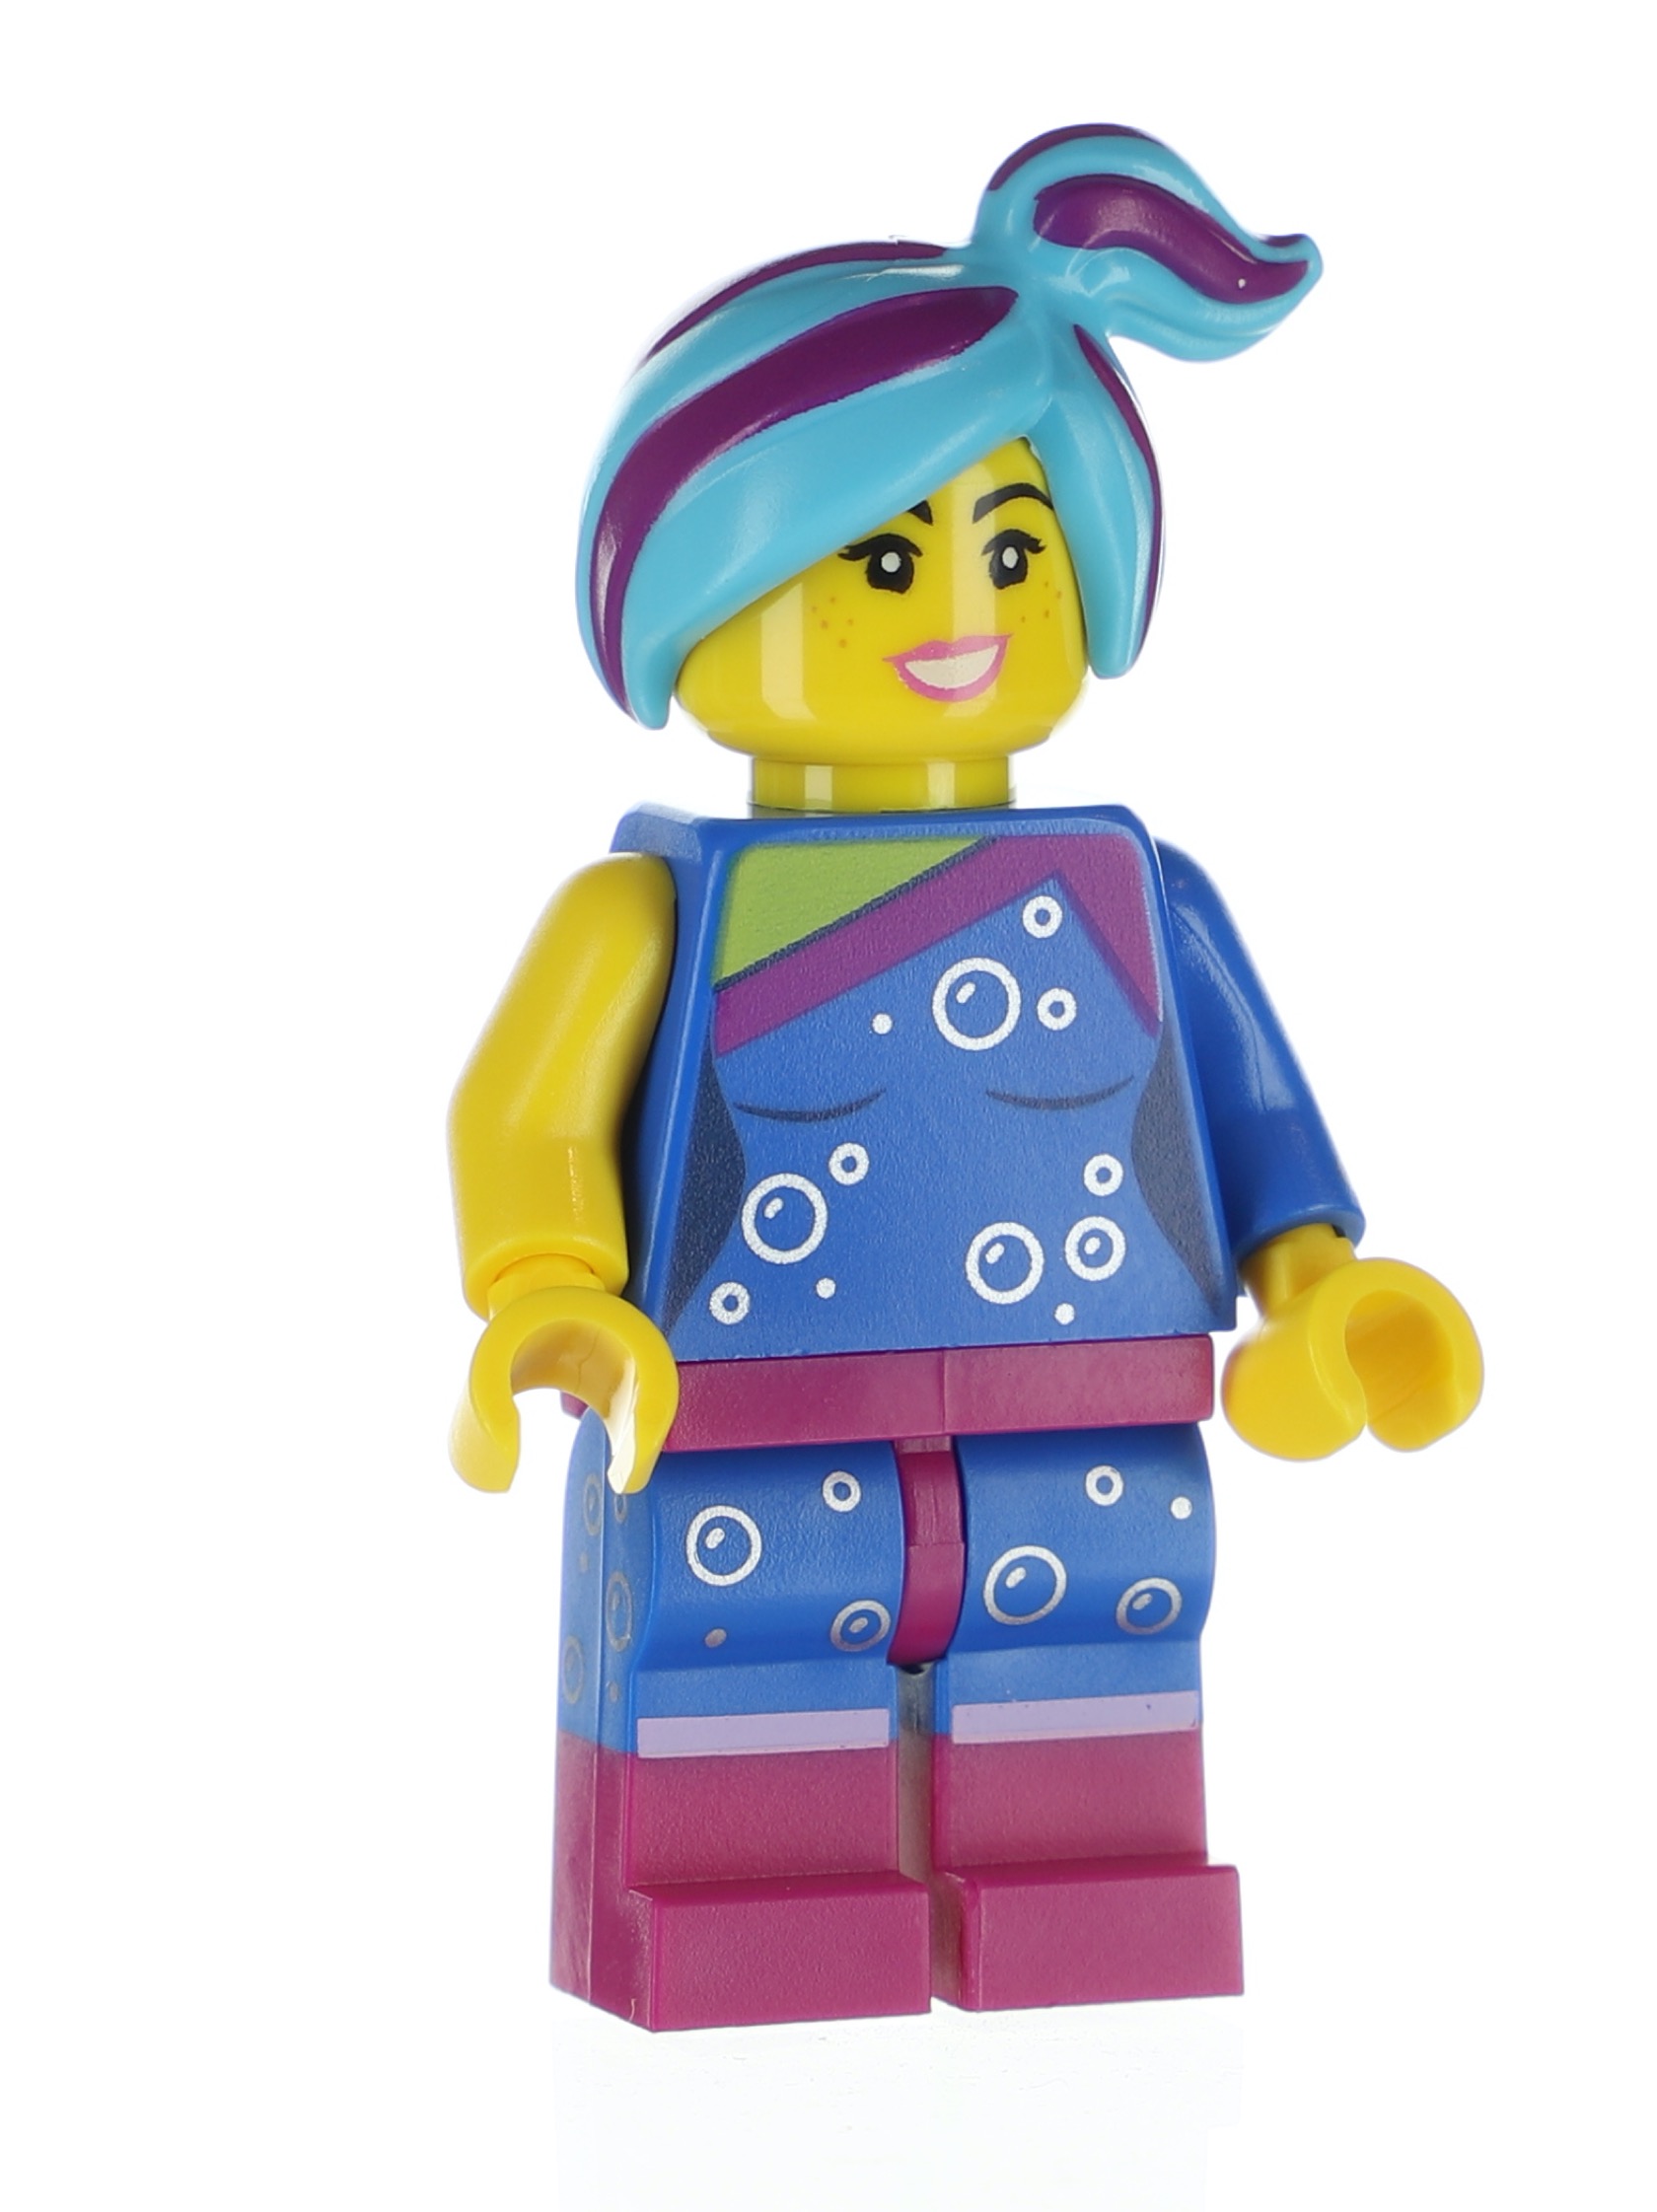 Lego New figurine Flashback Lucy 71023 Film LEGO Minifigures 